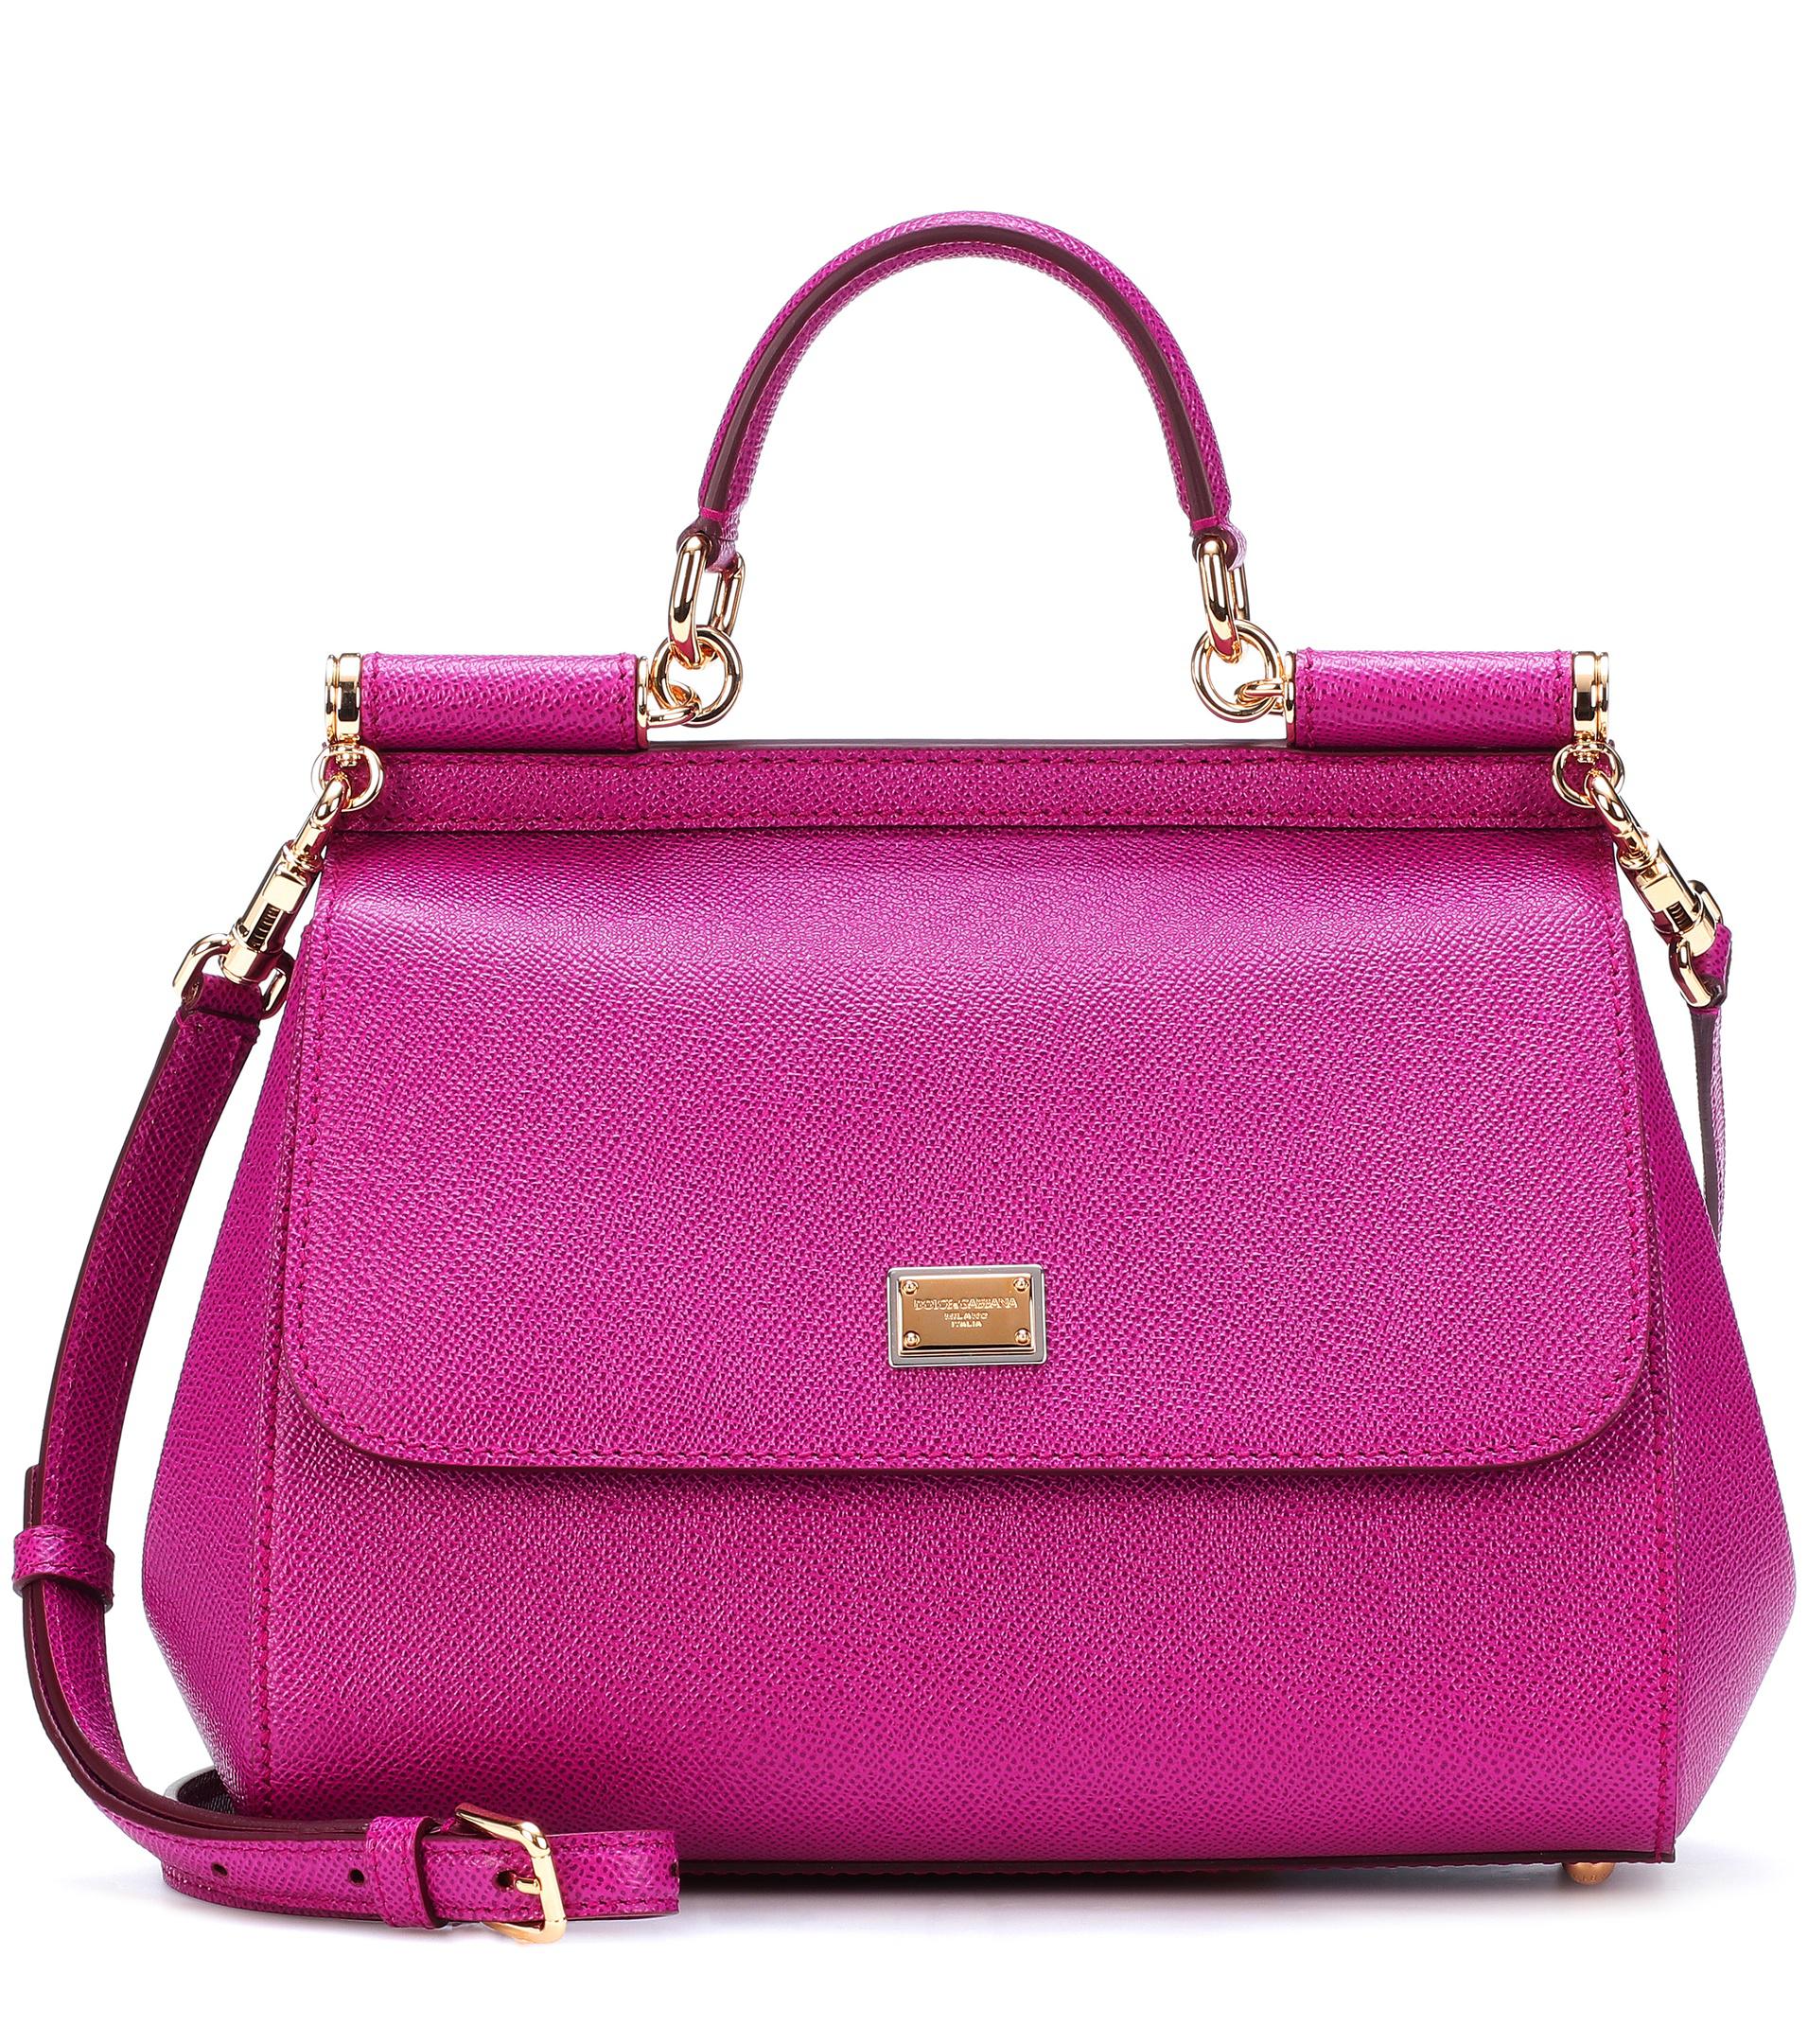 Dolce & Gabbana Sicily Medium Leather Shoulder Bag in Purple - Lyst